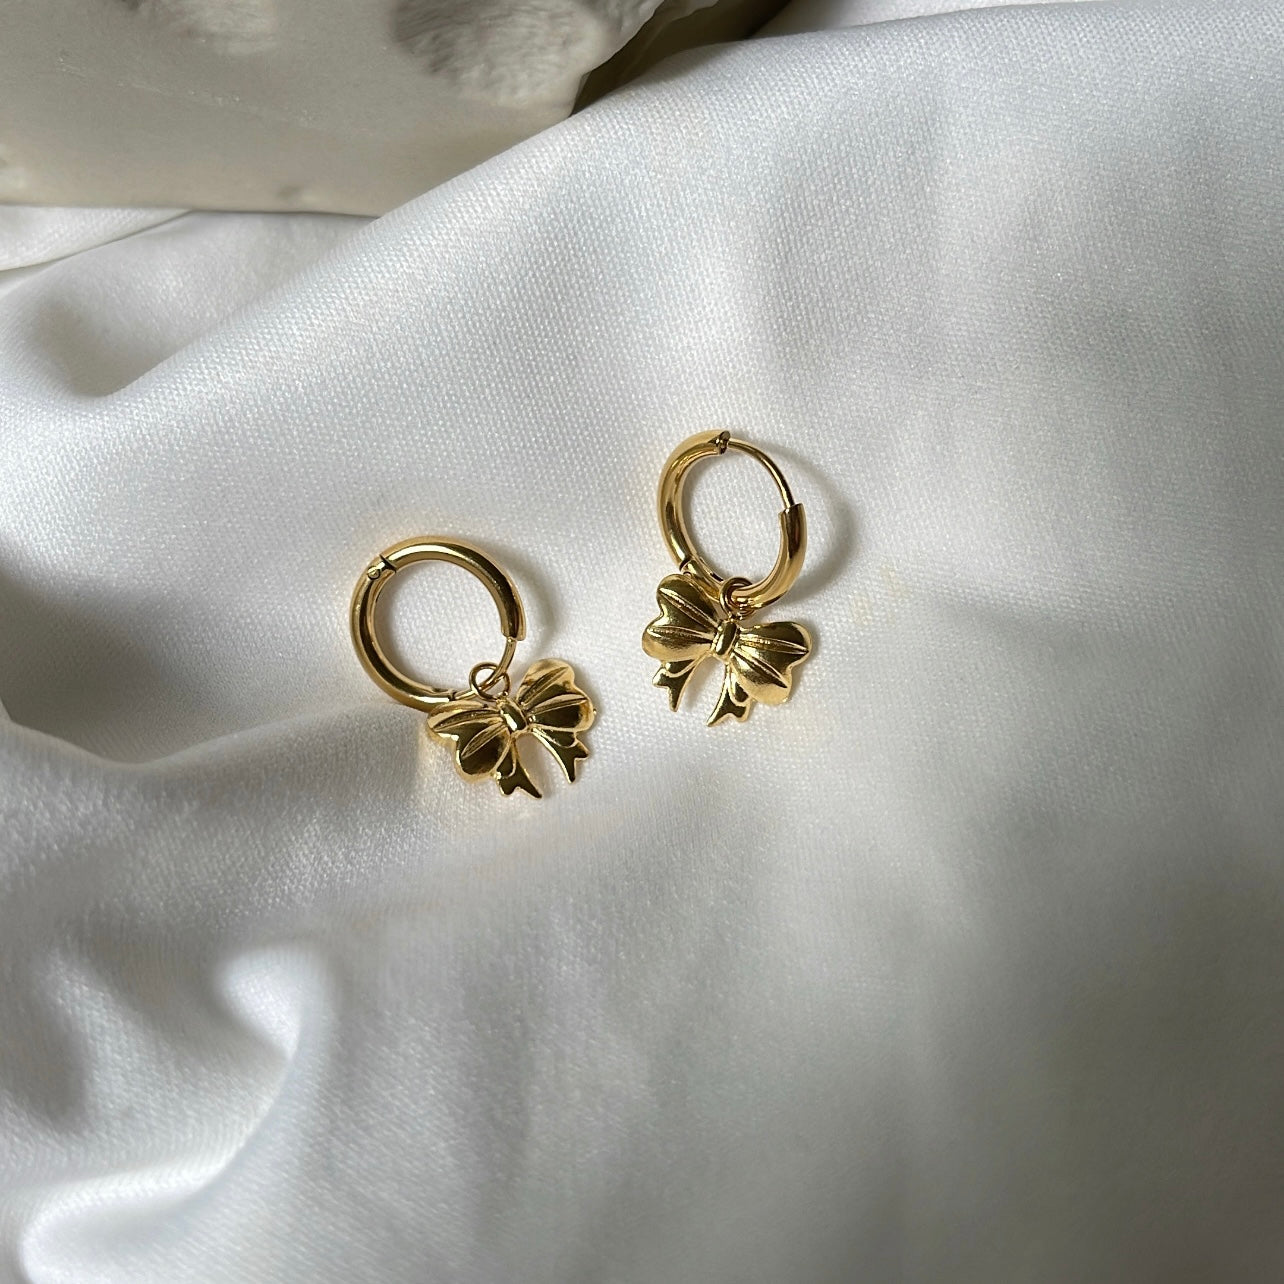 Bow charm earrings